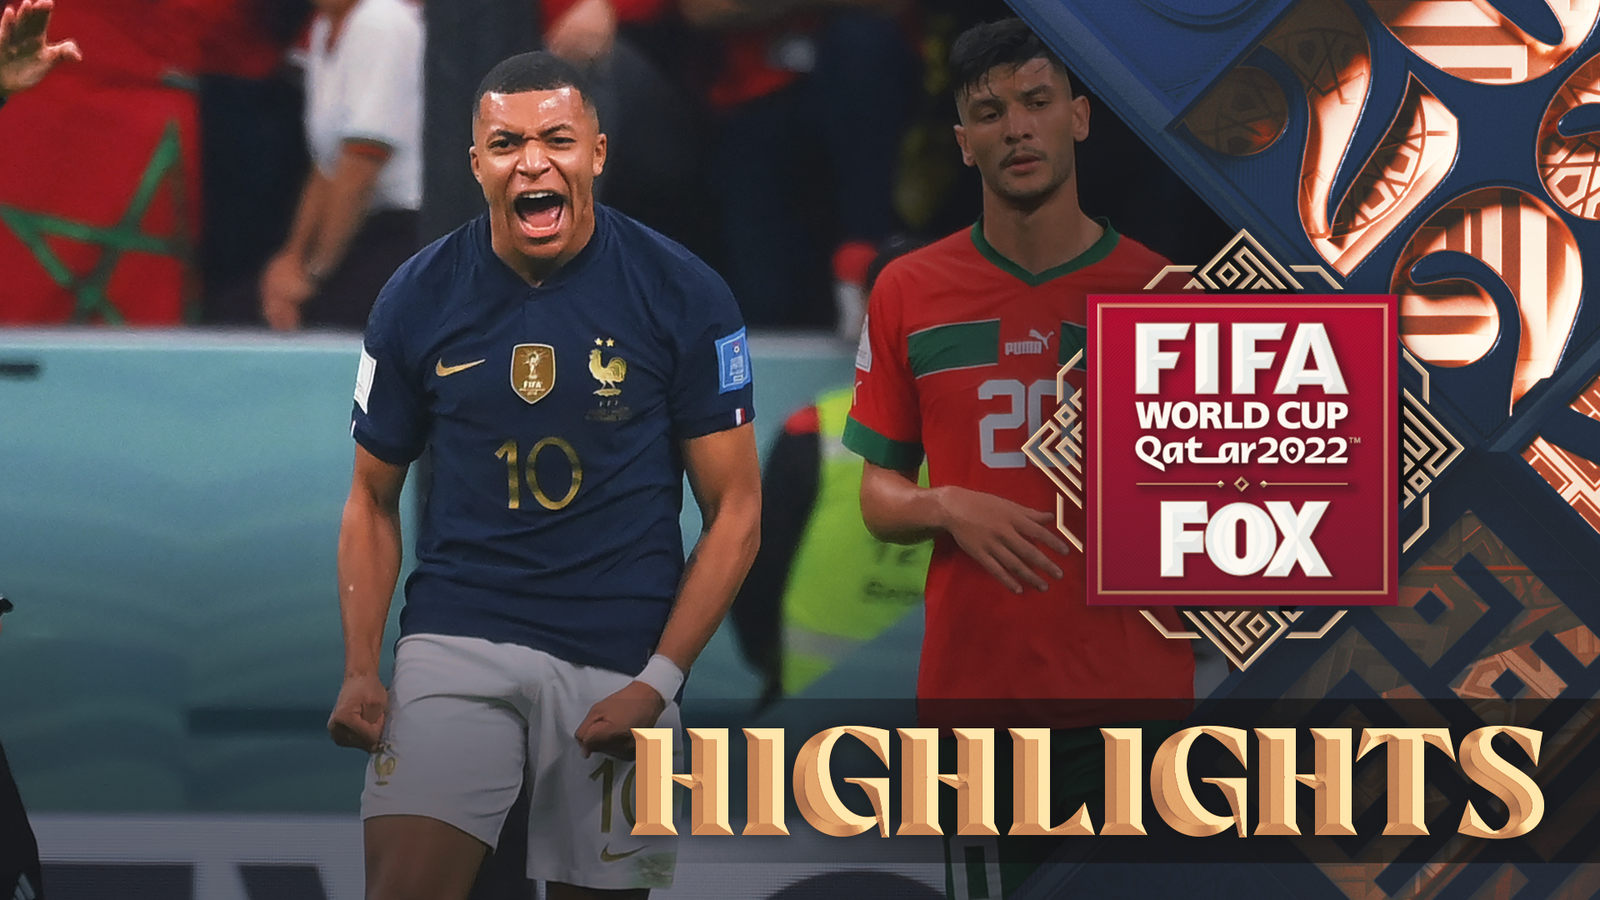 Highlights of France vs Morocco